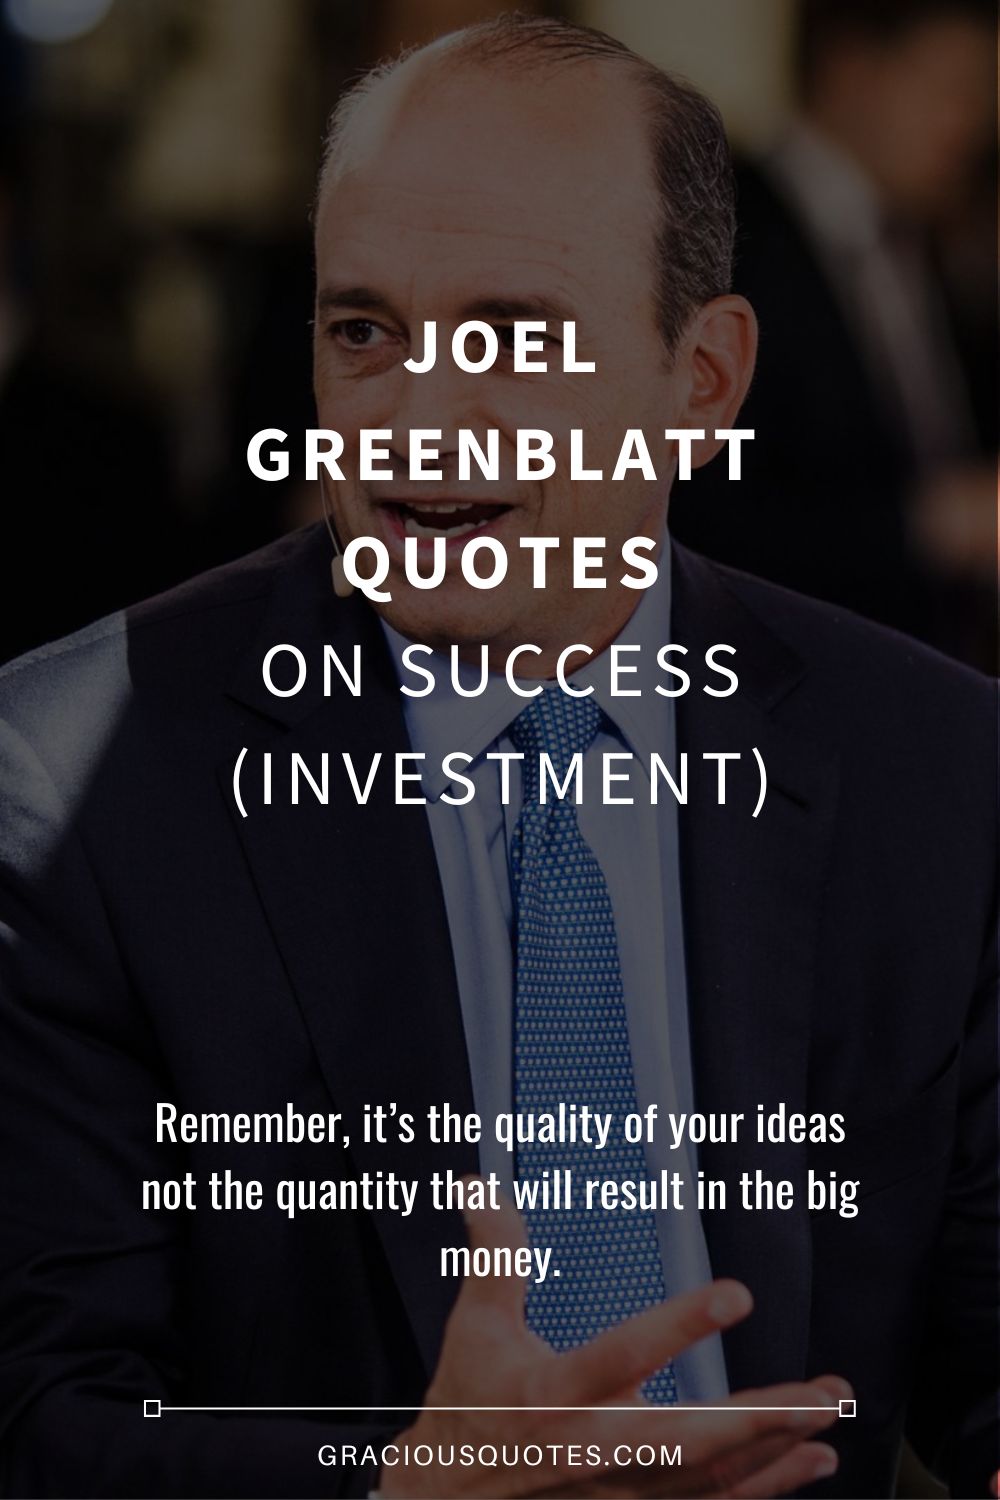 Joel Greenblatt Quotes on Success (INVESTMENT) - Gracious Quotes